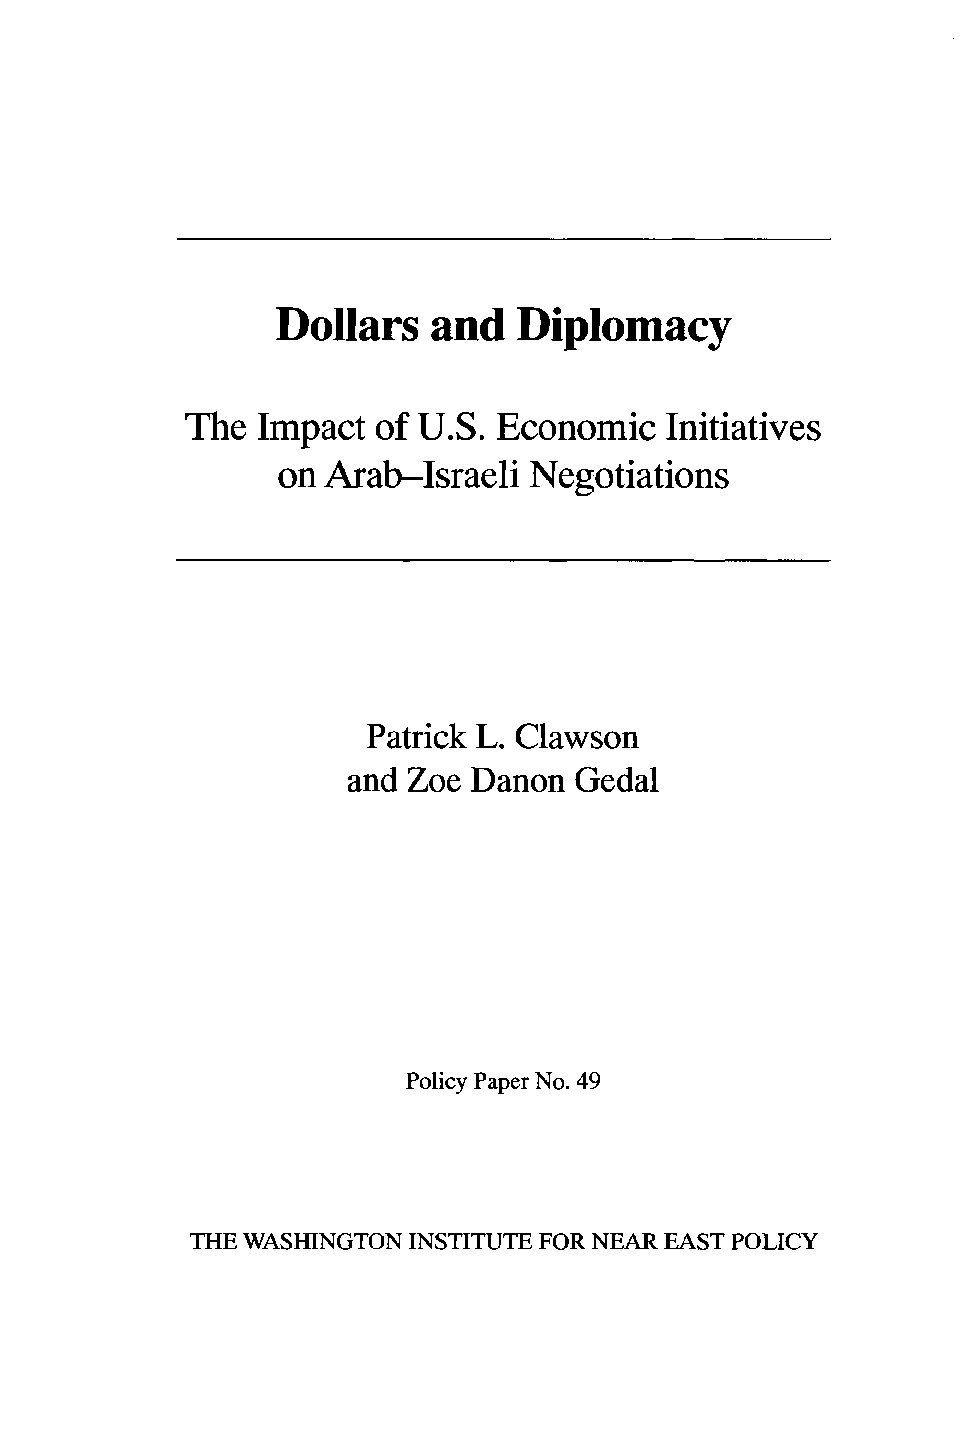 PP_49_DOLLARS_AND_DIPLOMACY.pdf